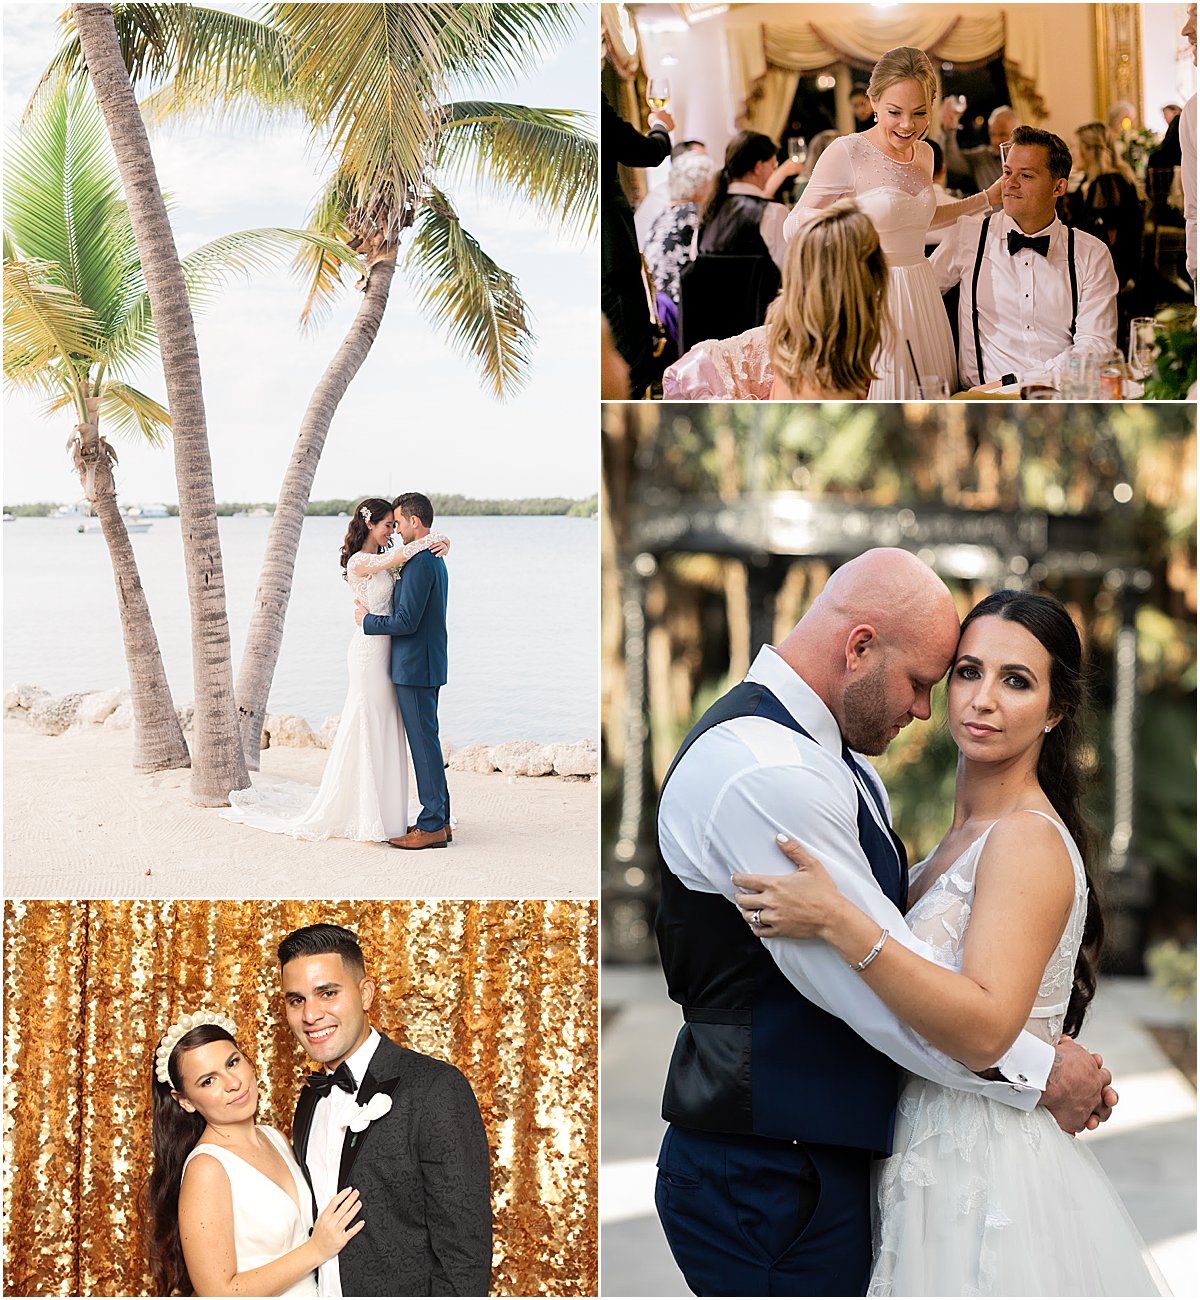 Love Under the Palms | Married in Palm Beach | www.marriedinpalmbeach.com